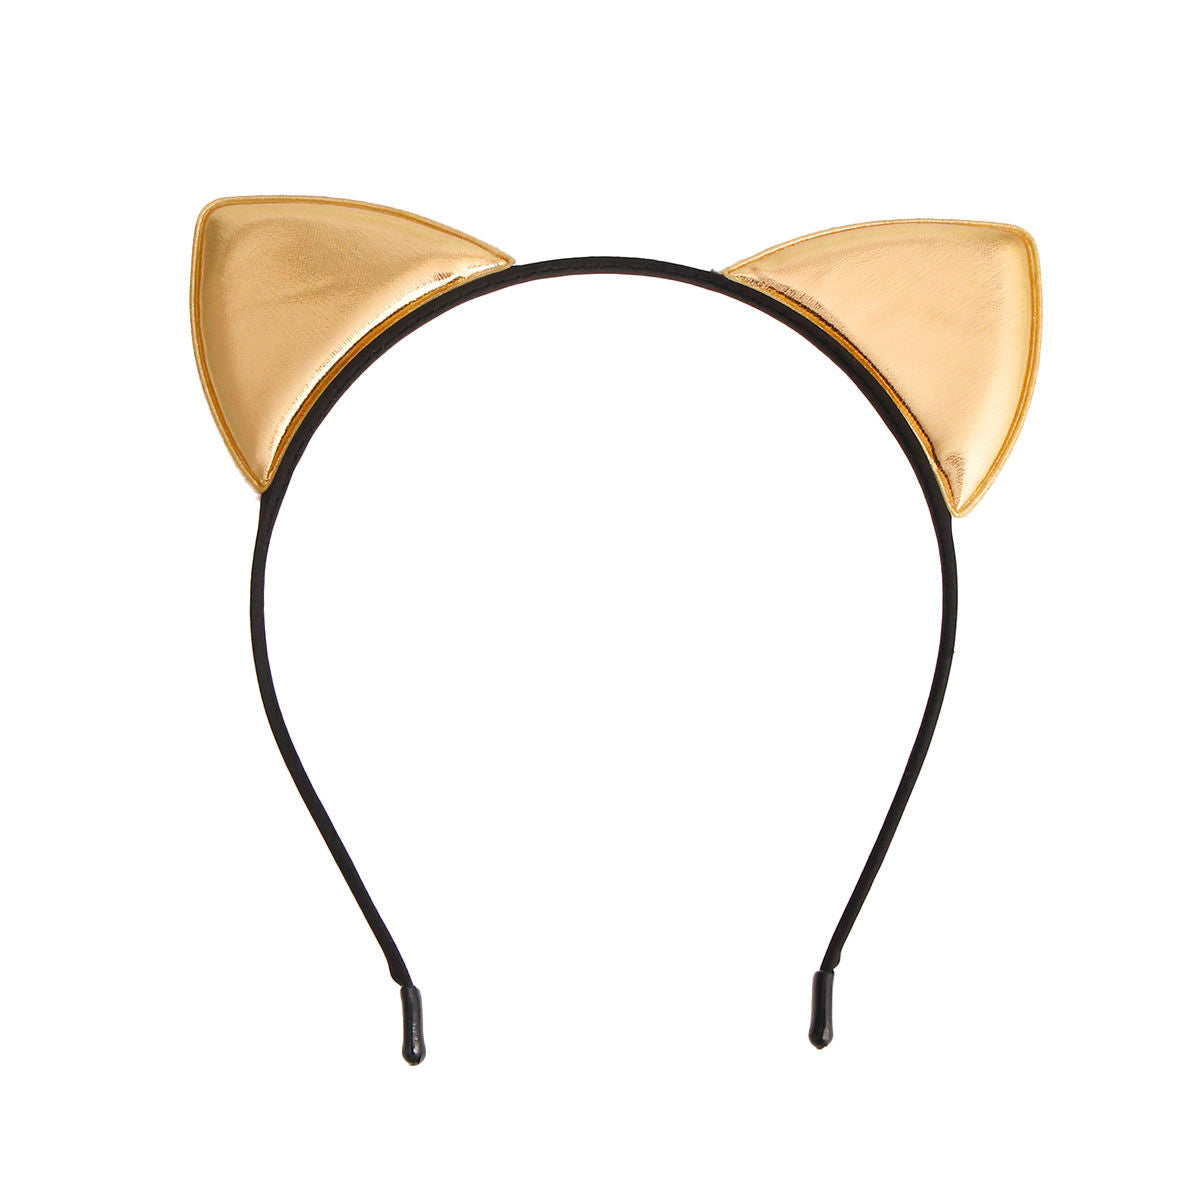 Gold Kitty Ears Headband